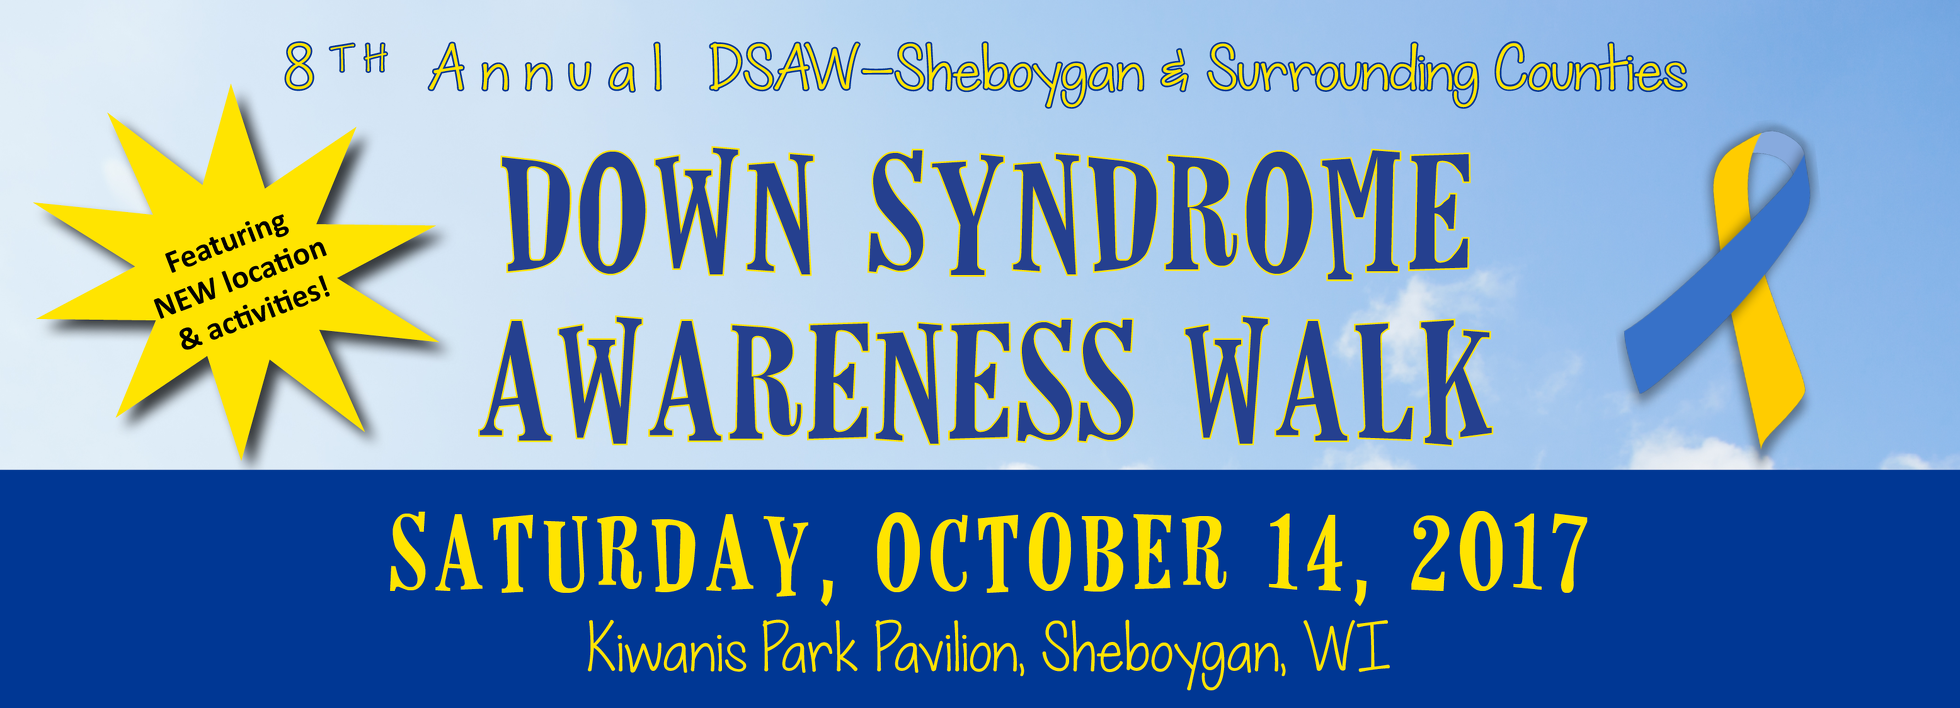 Sheboygan Down Syndrome Awareness Walk 2017